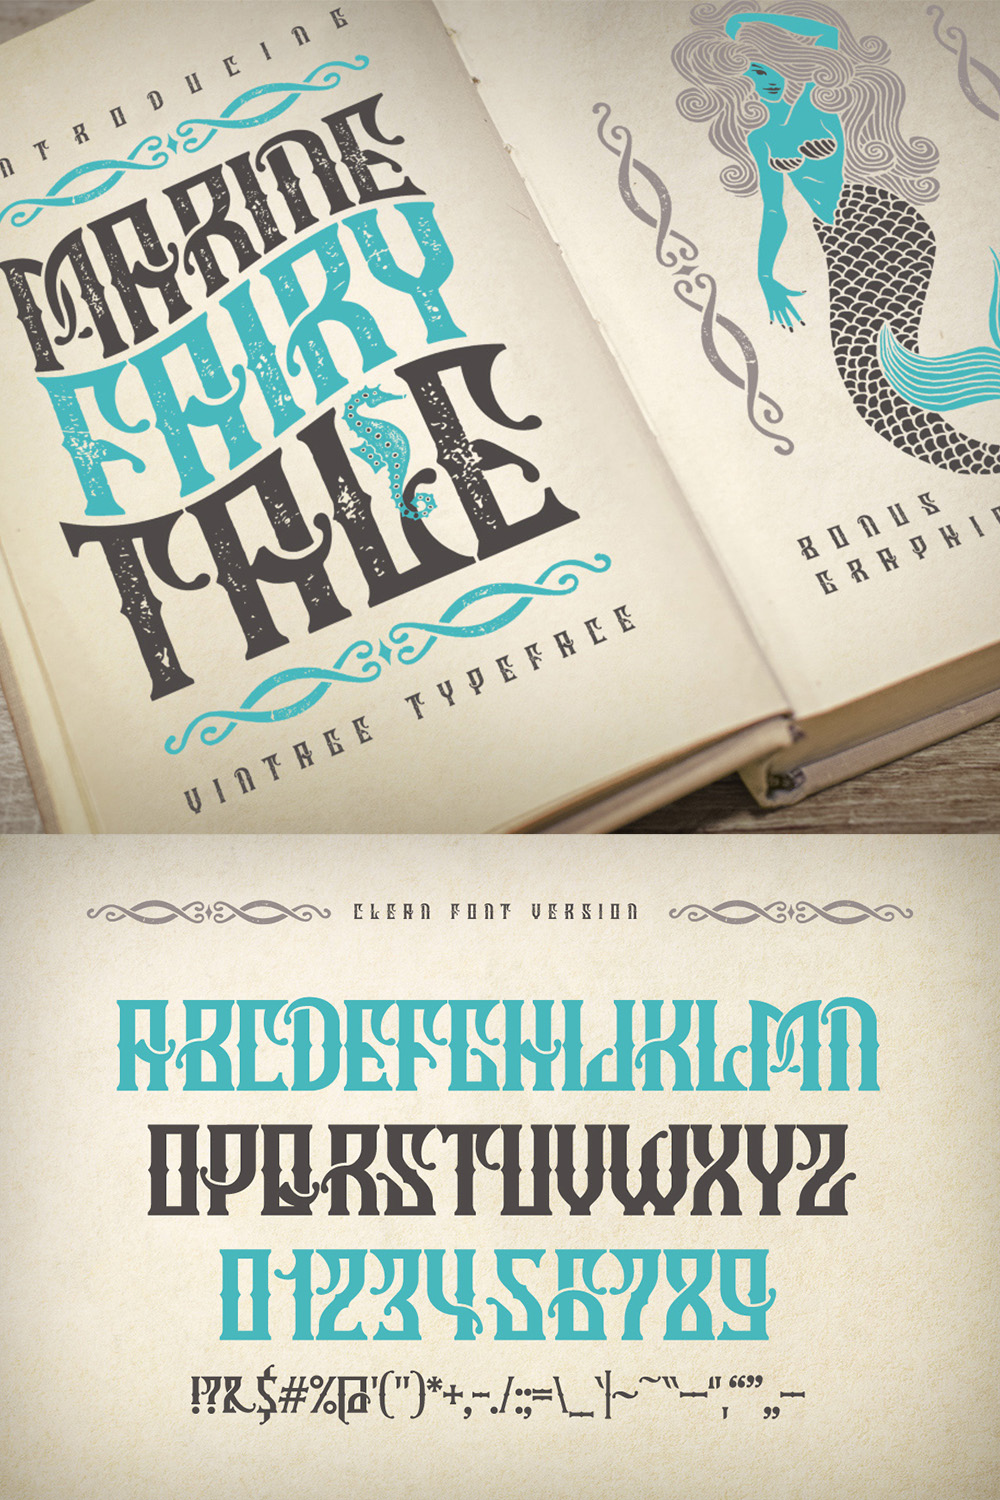 Marine Fairytale Typeface Pinterest Collage image.